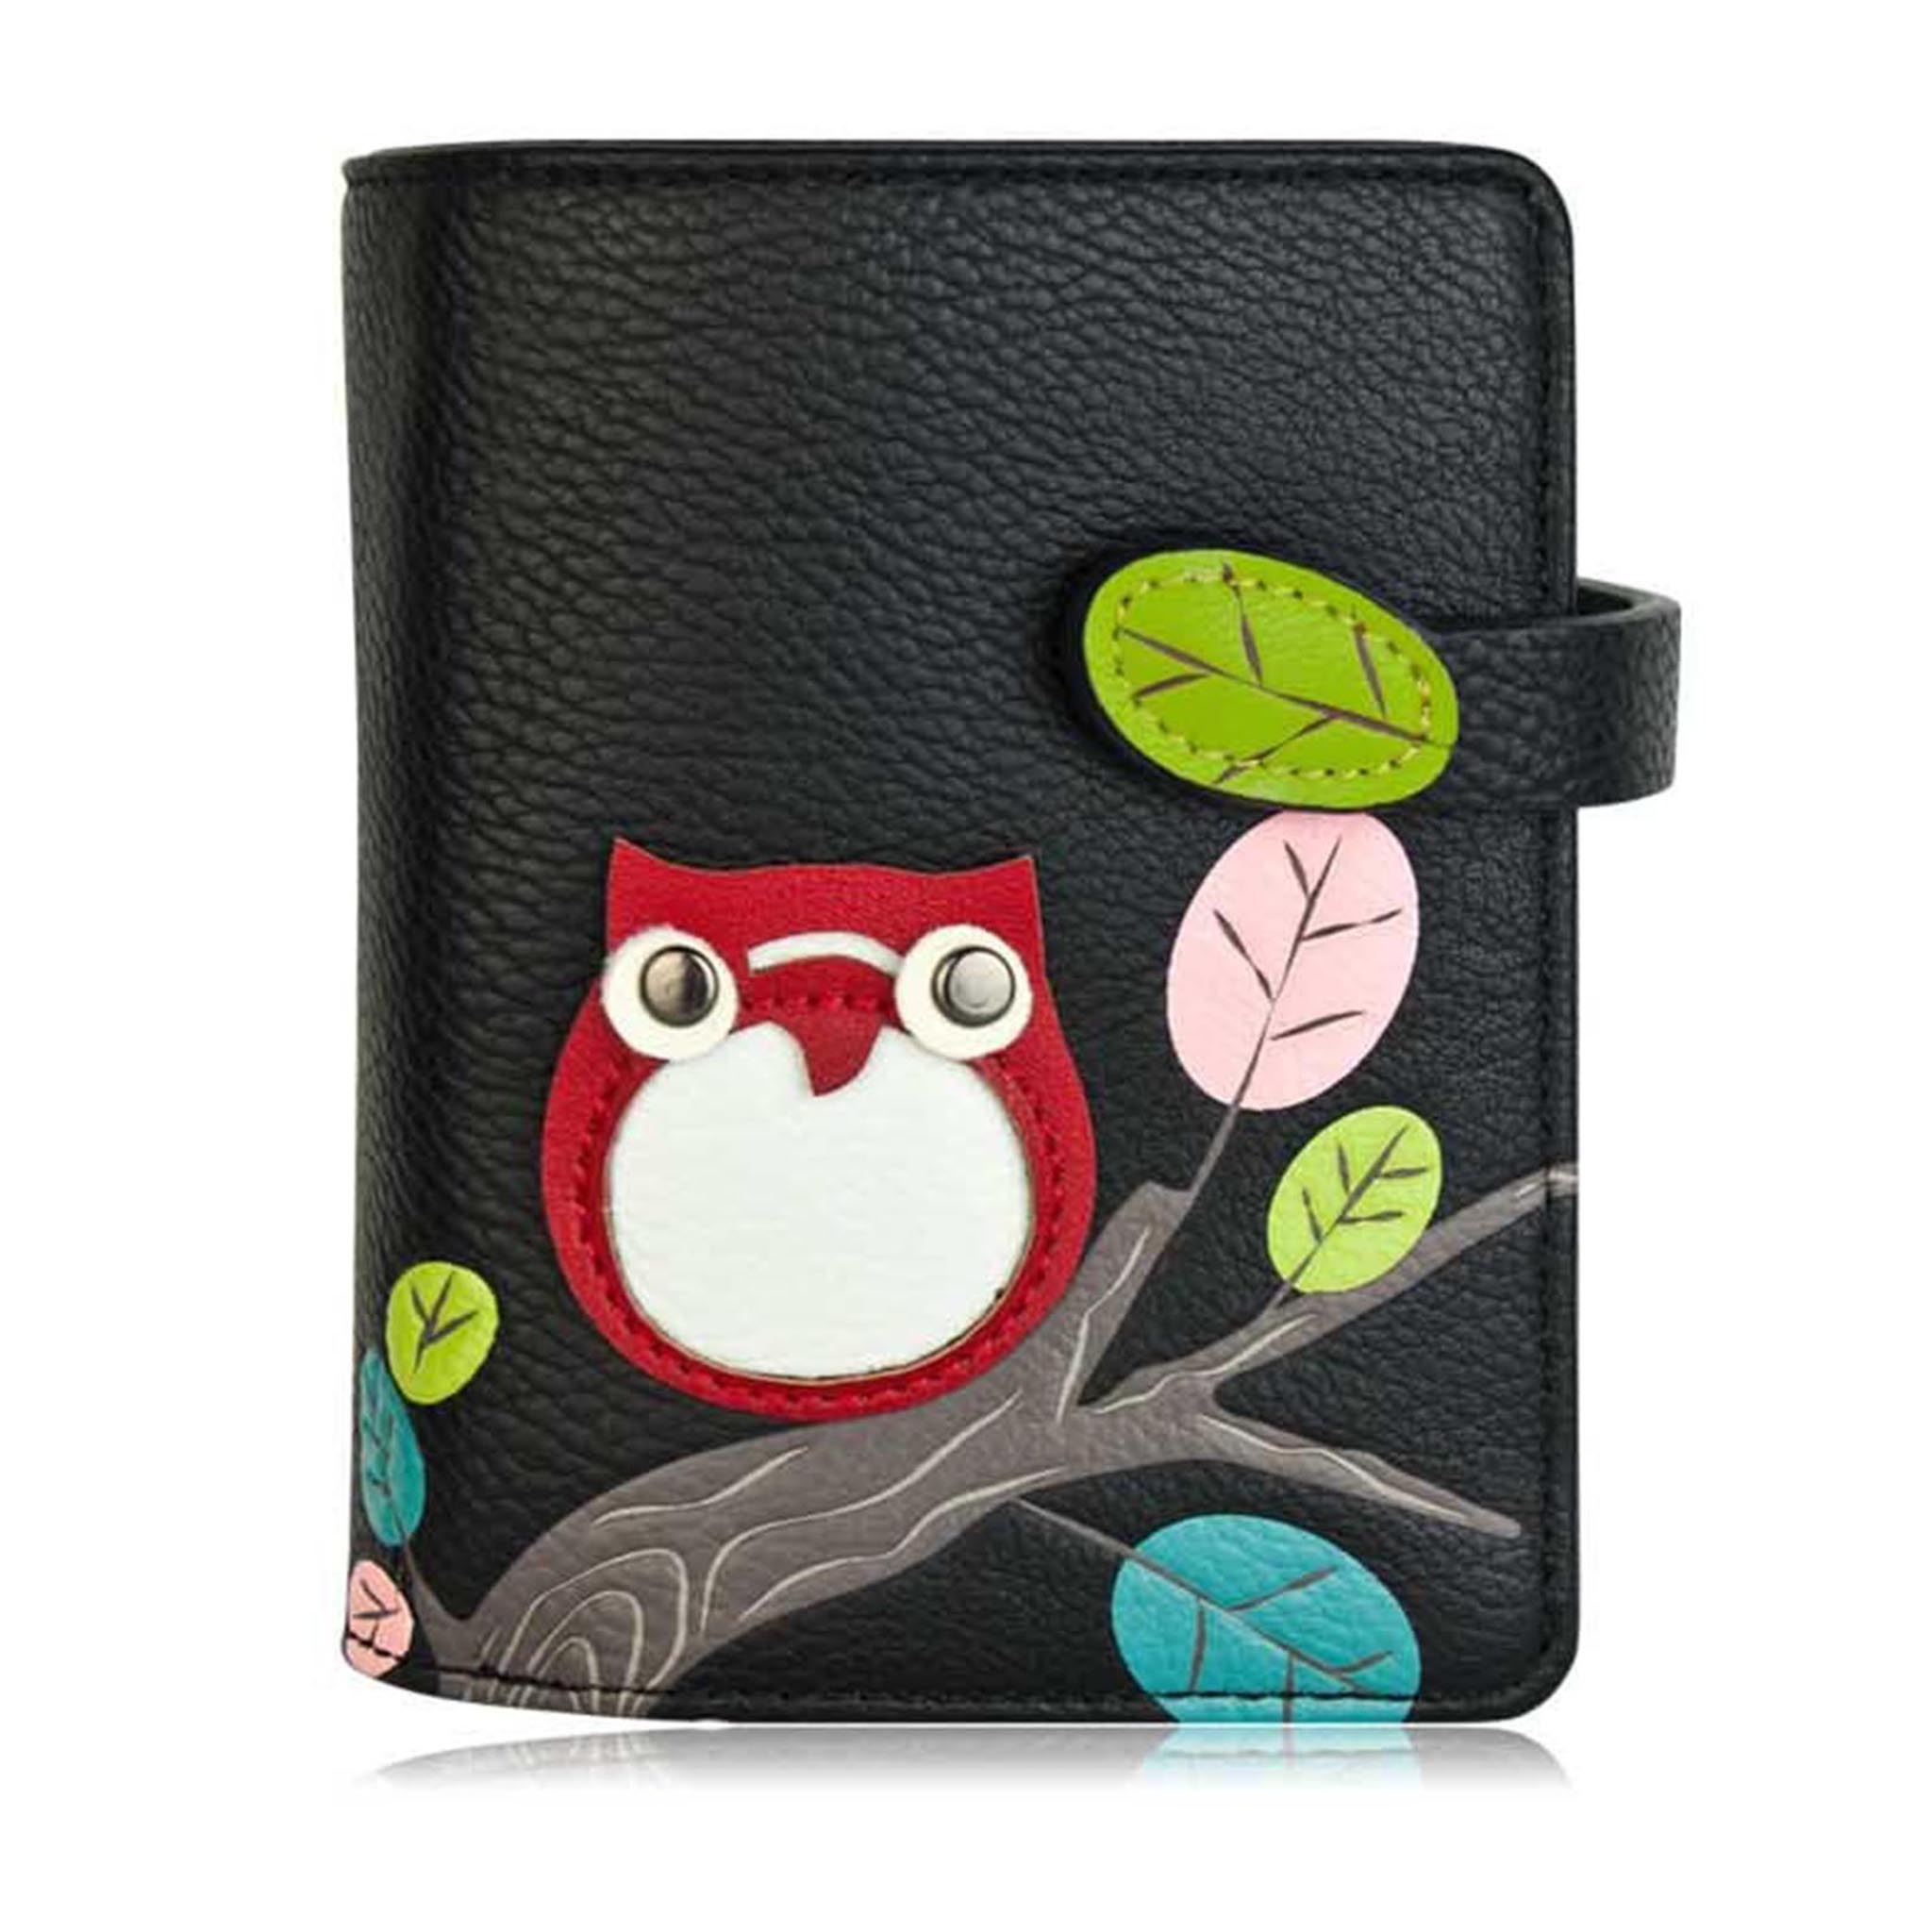 ESPE Gemma Vegan Leather Small Wallet with Cherry Blossom Appliqué Black